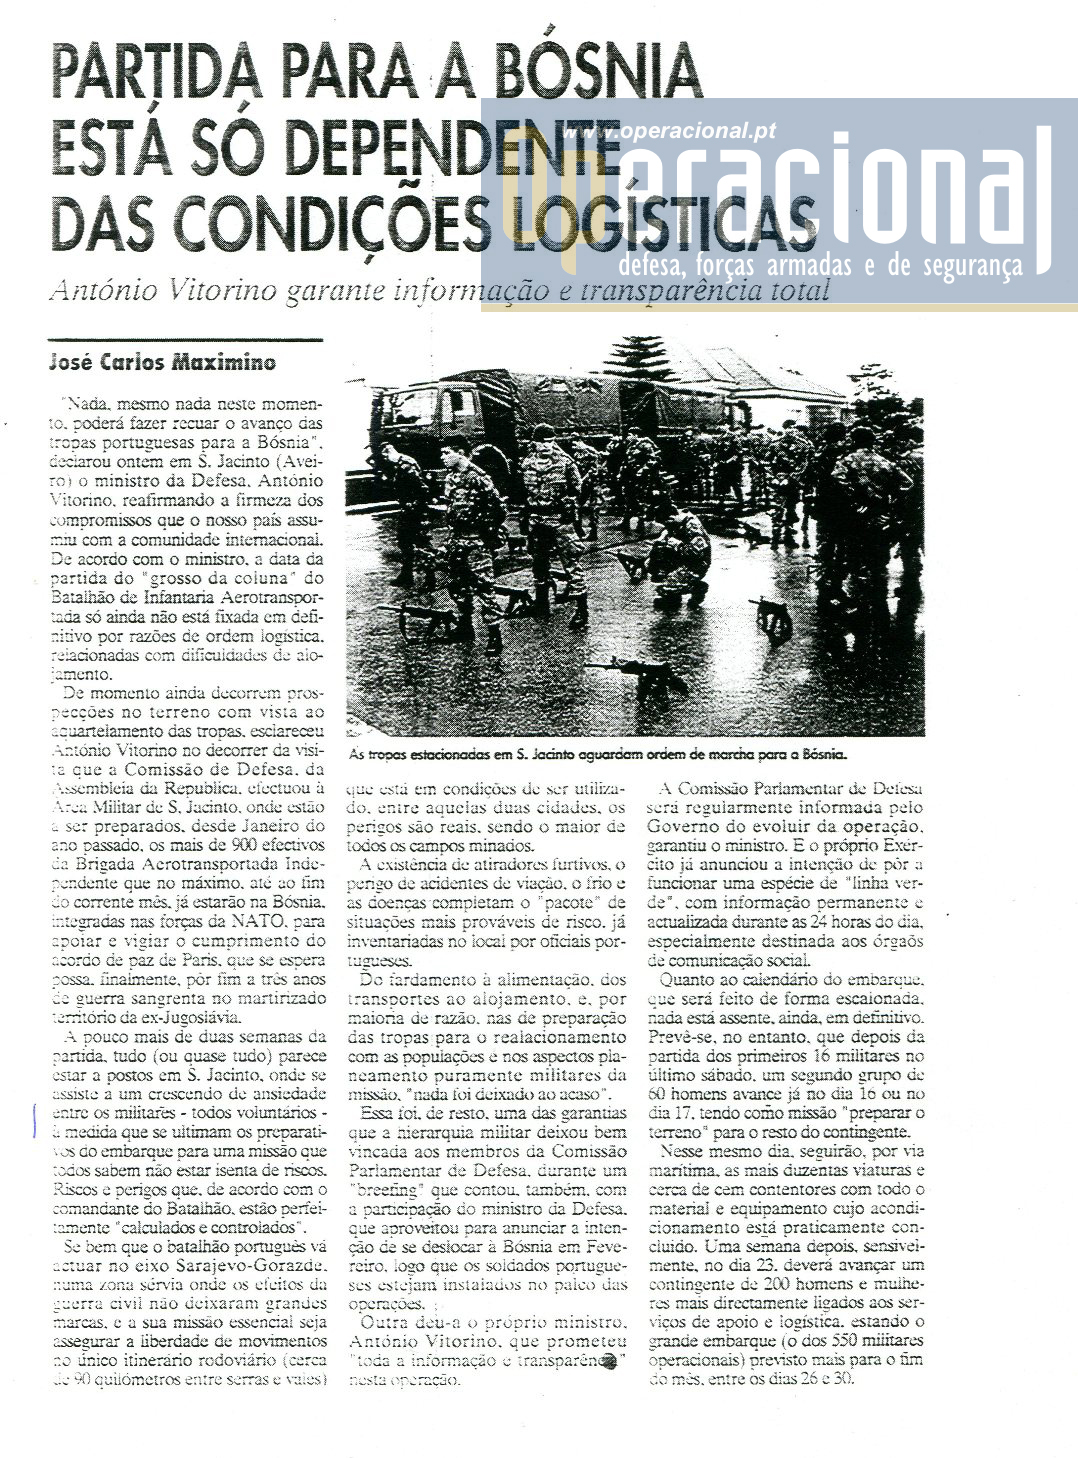 10JAN96 - "Jornal de Noticias"